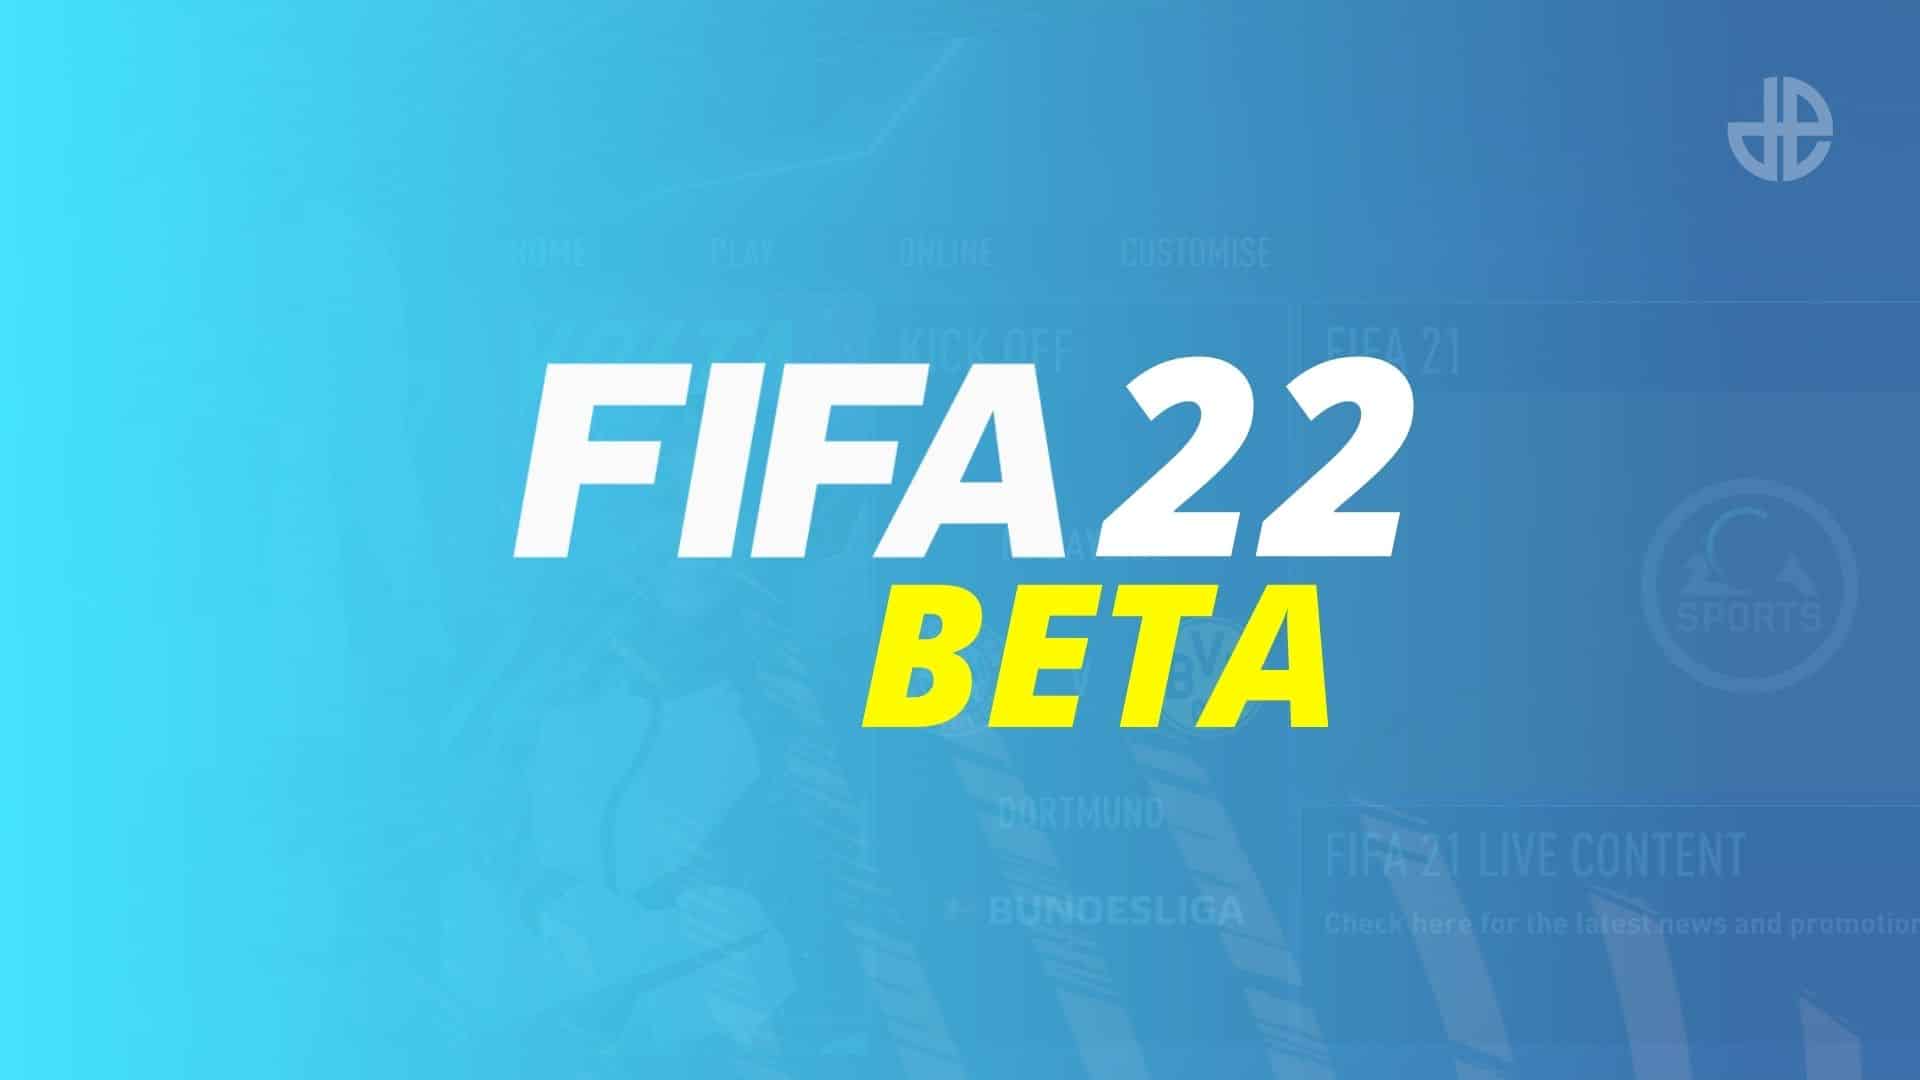 FIFA 22 closed beta